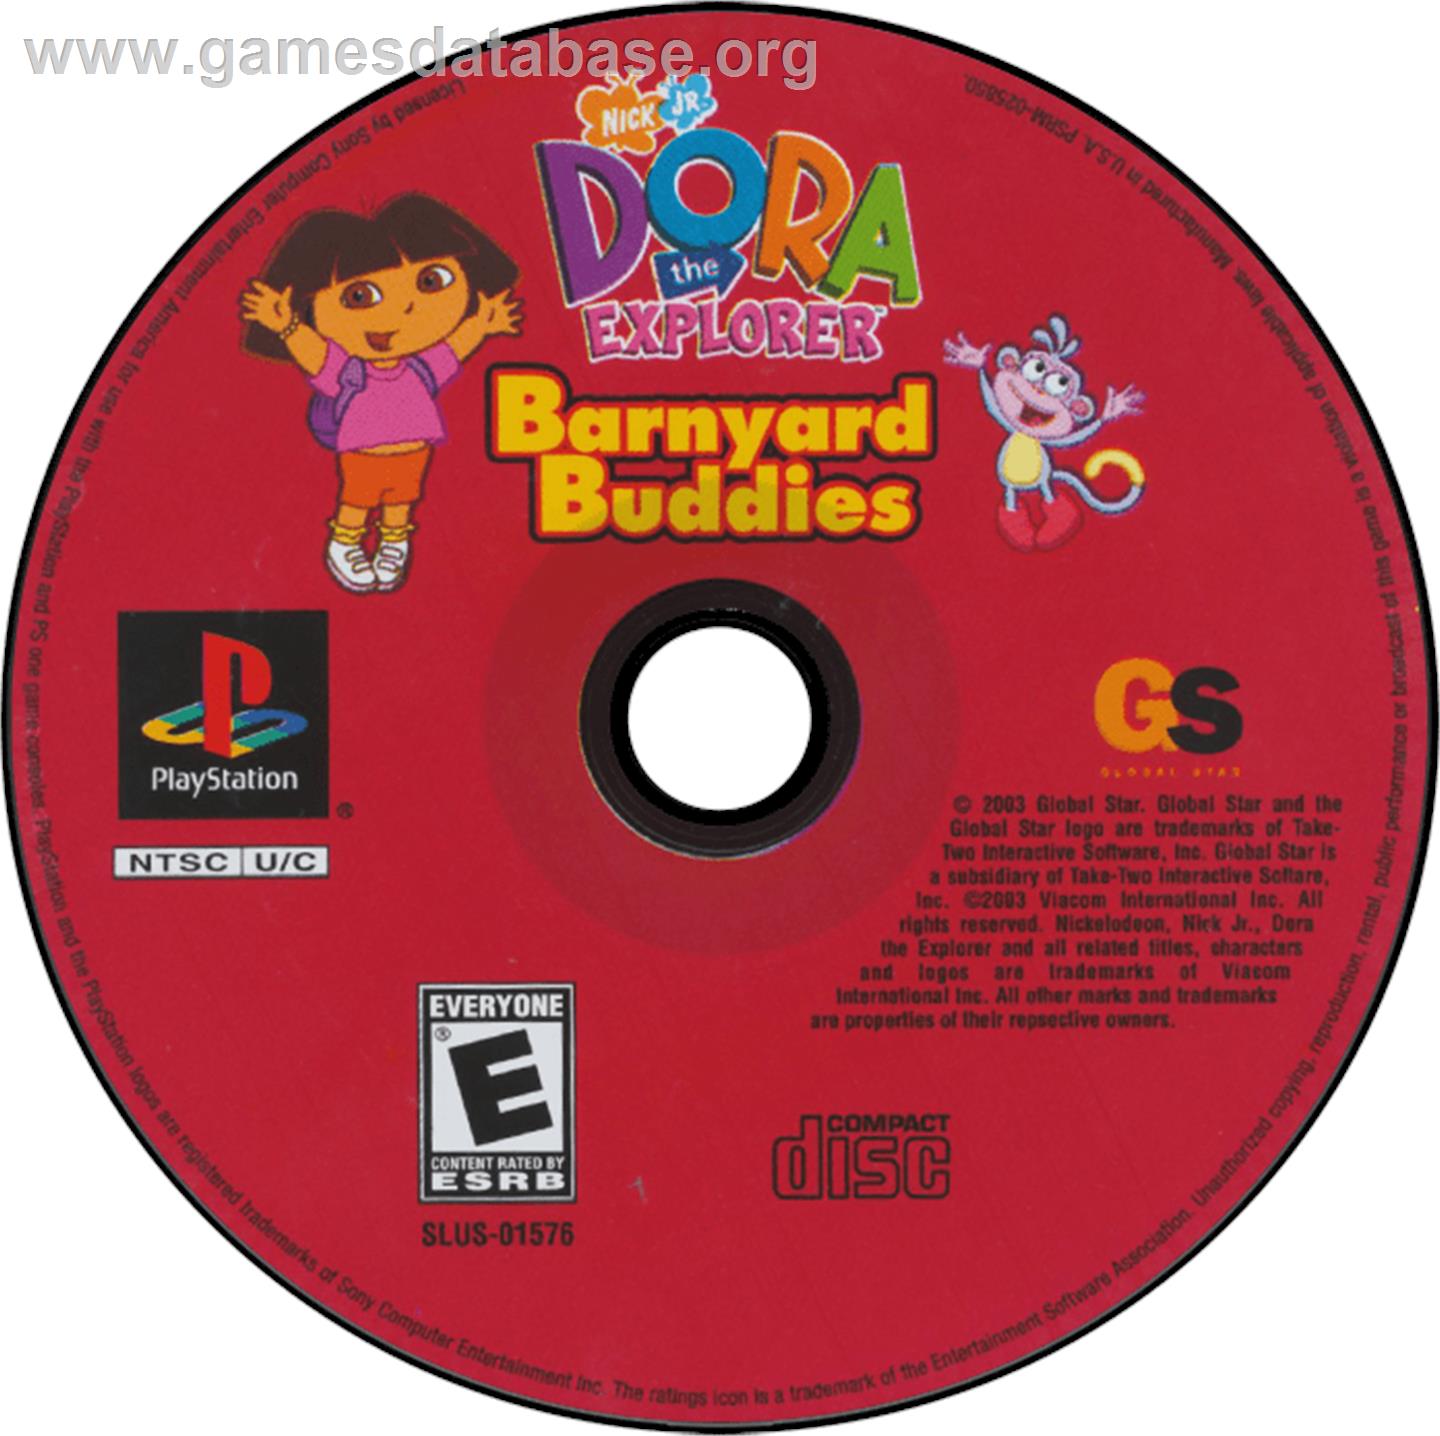 Dora the Explorer: Barnyard Buddies - Sony Playstation - Artwork - Disc